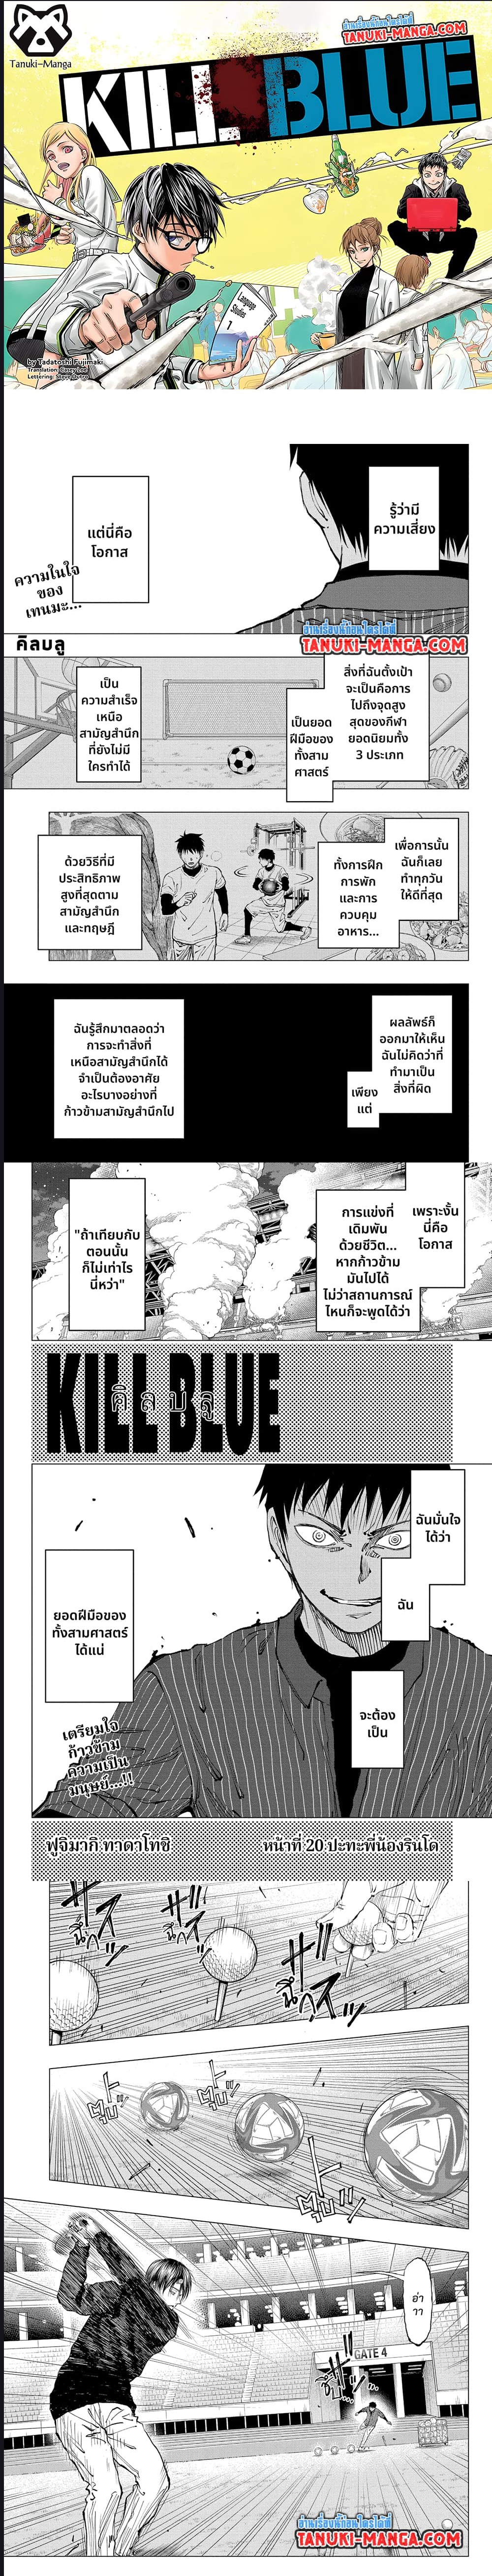 Kill Blue ตอนที่ 20 (1)